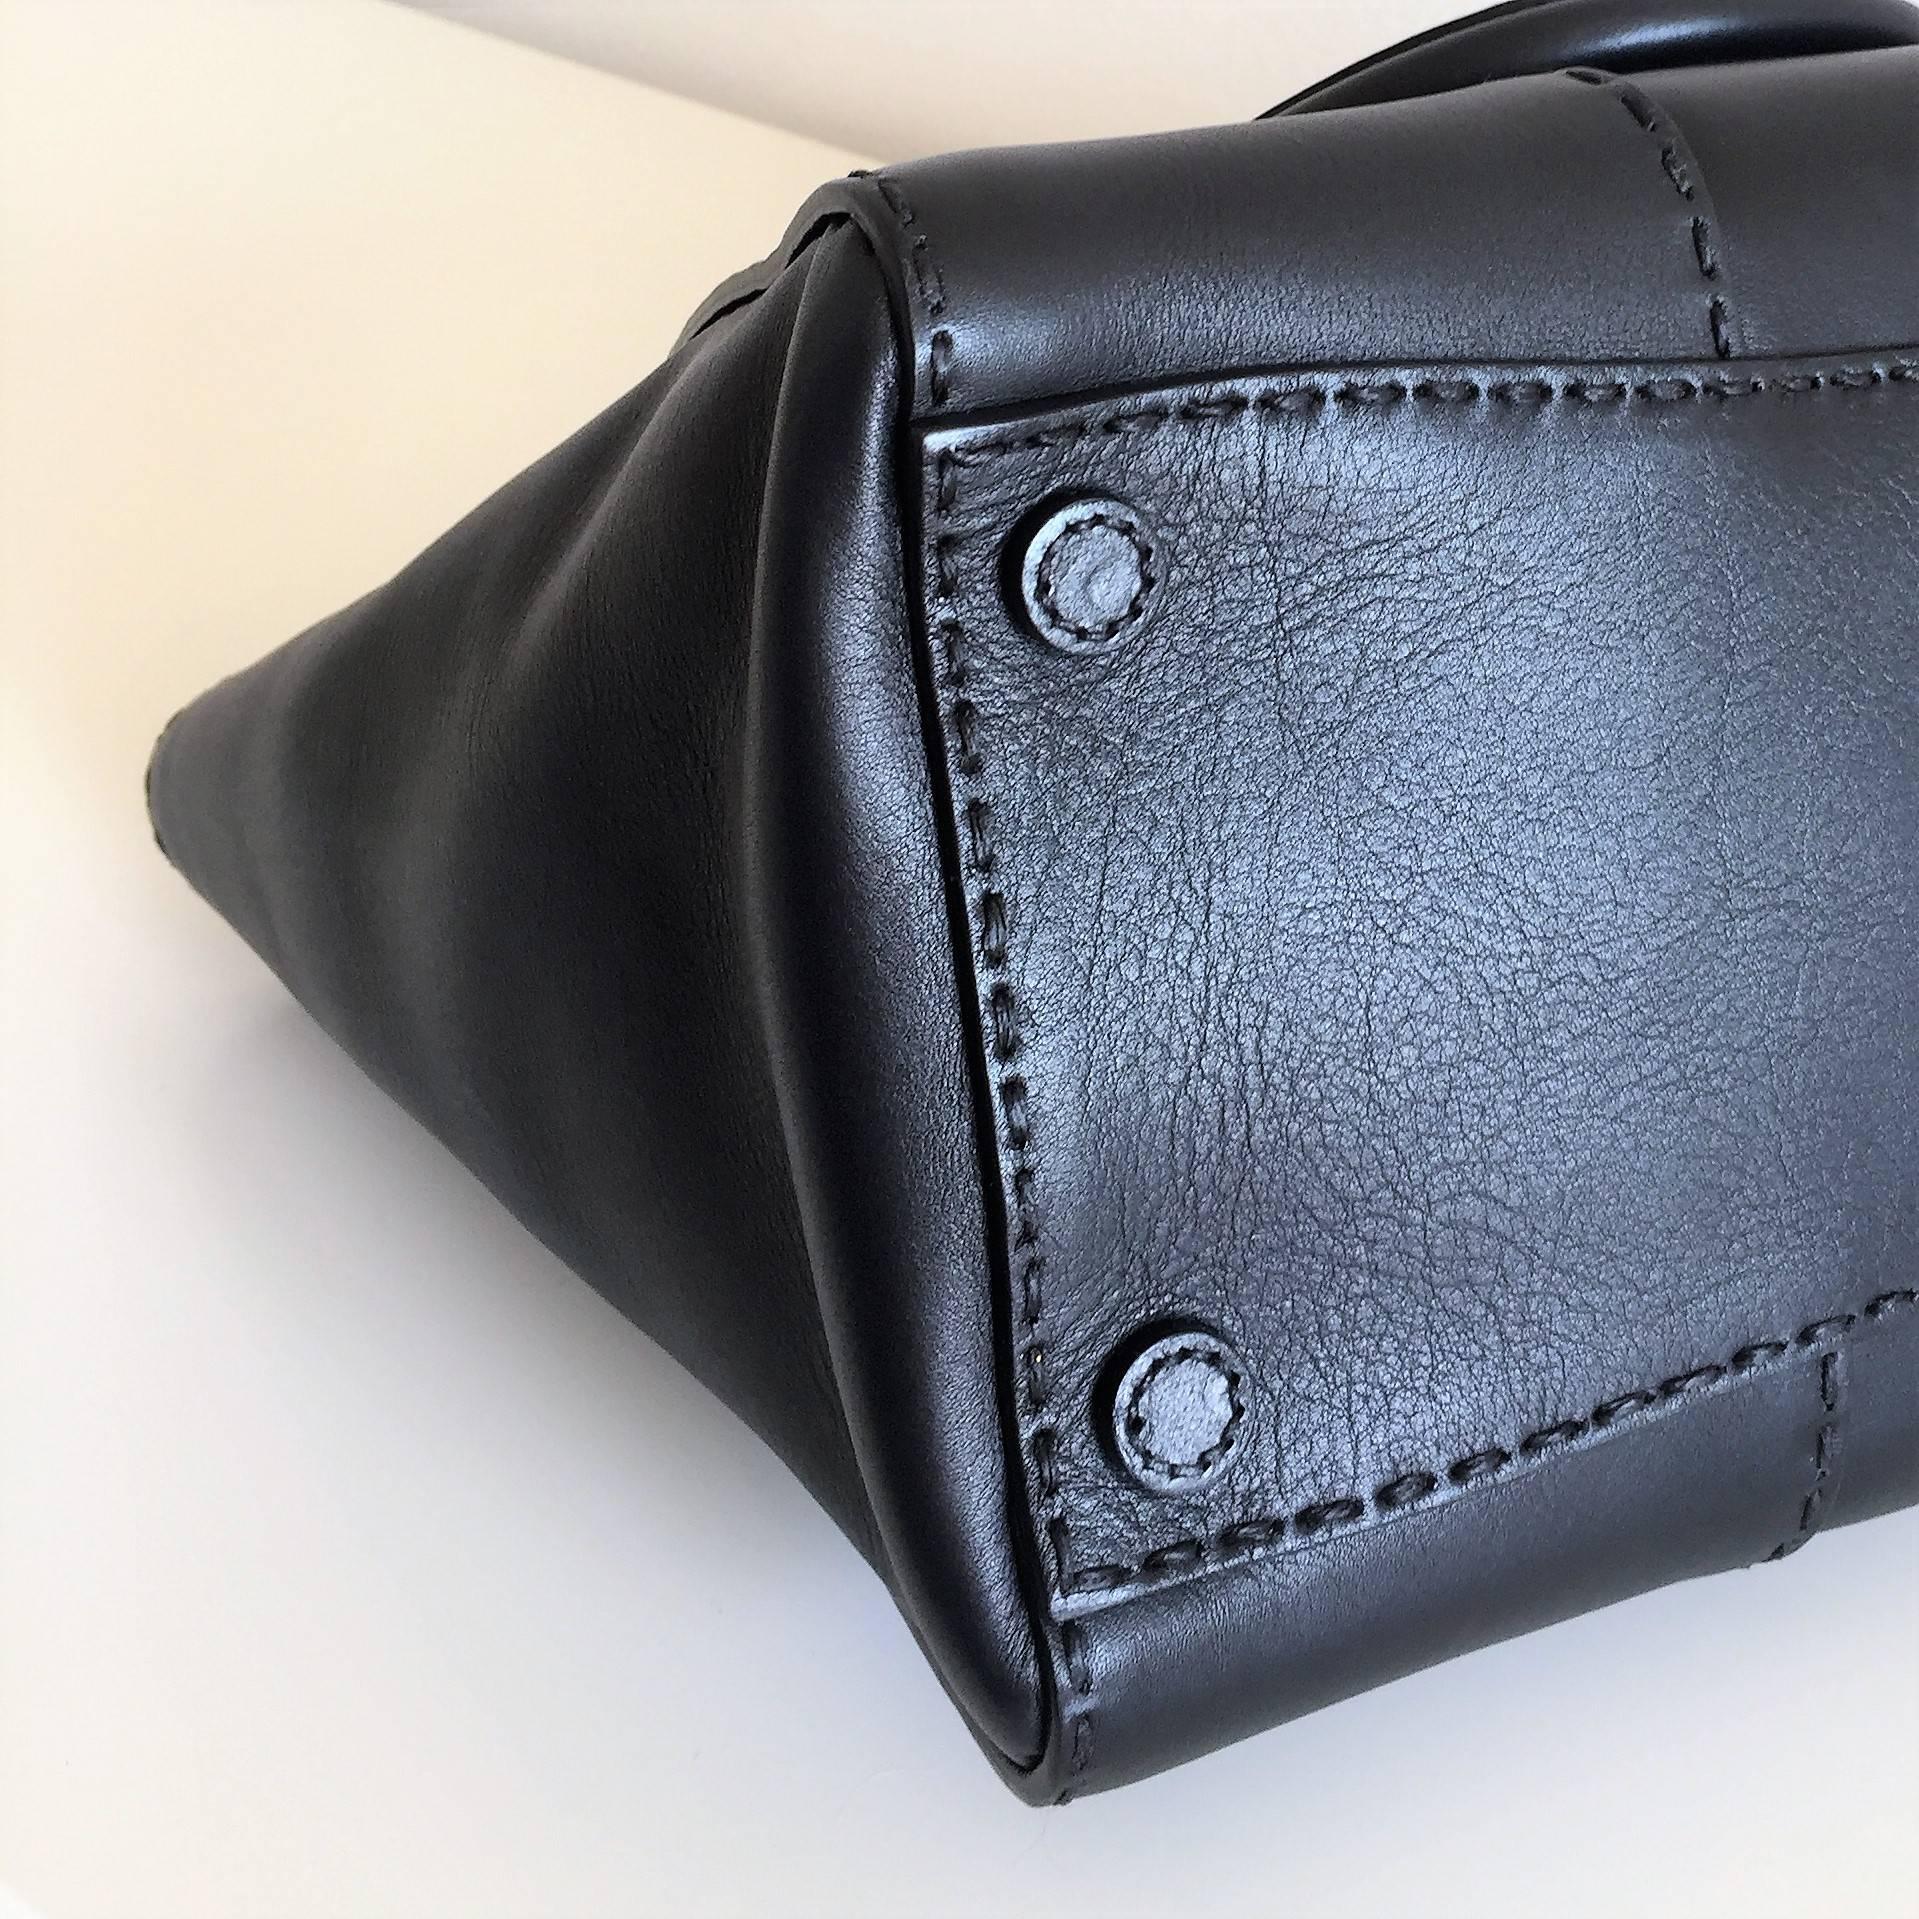 Prada Black Leather Shoulder bag, a Pristine '2way City' Calf Leather Tote For Sale 3